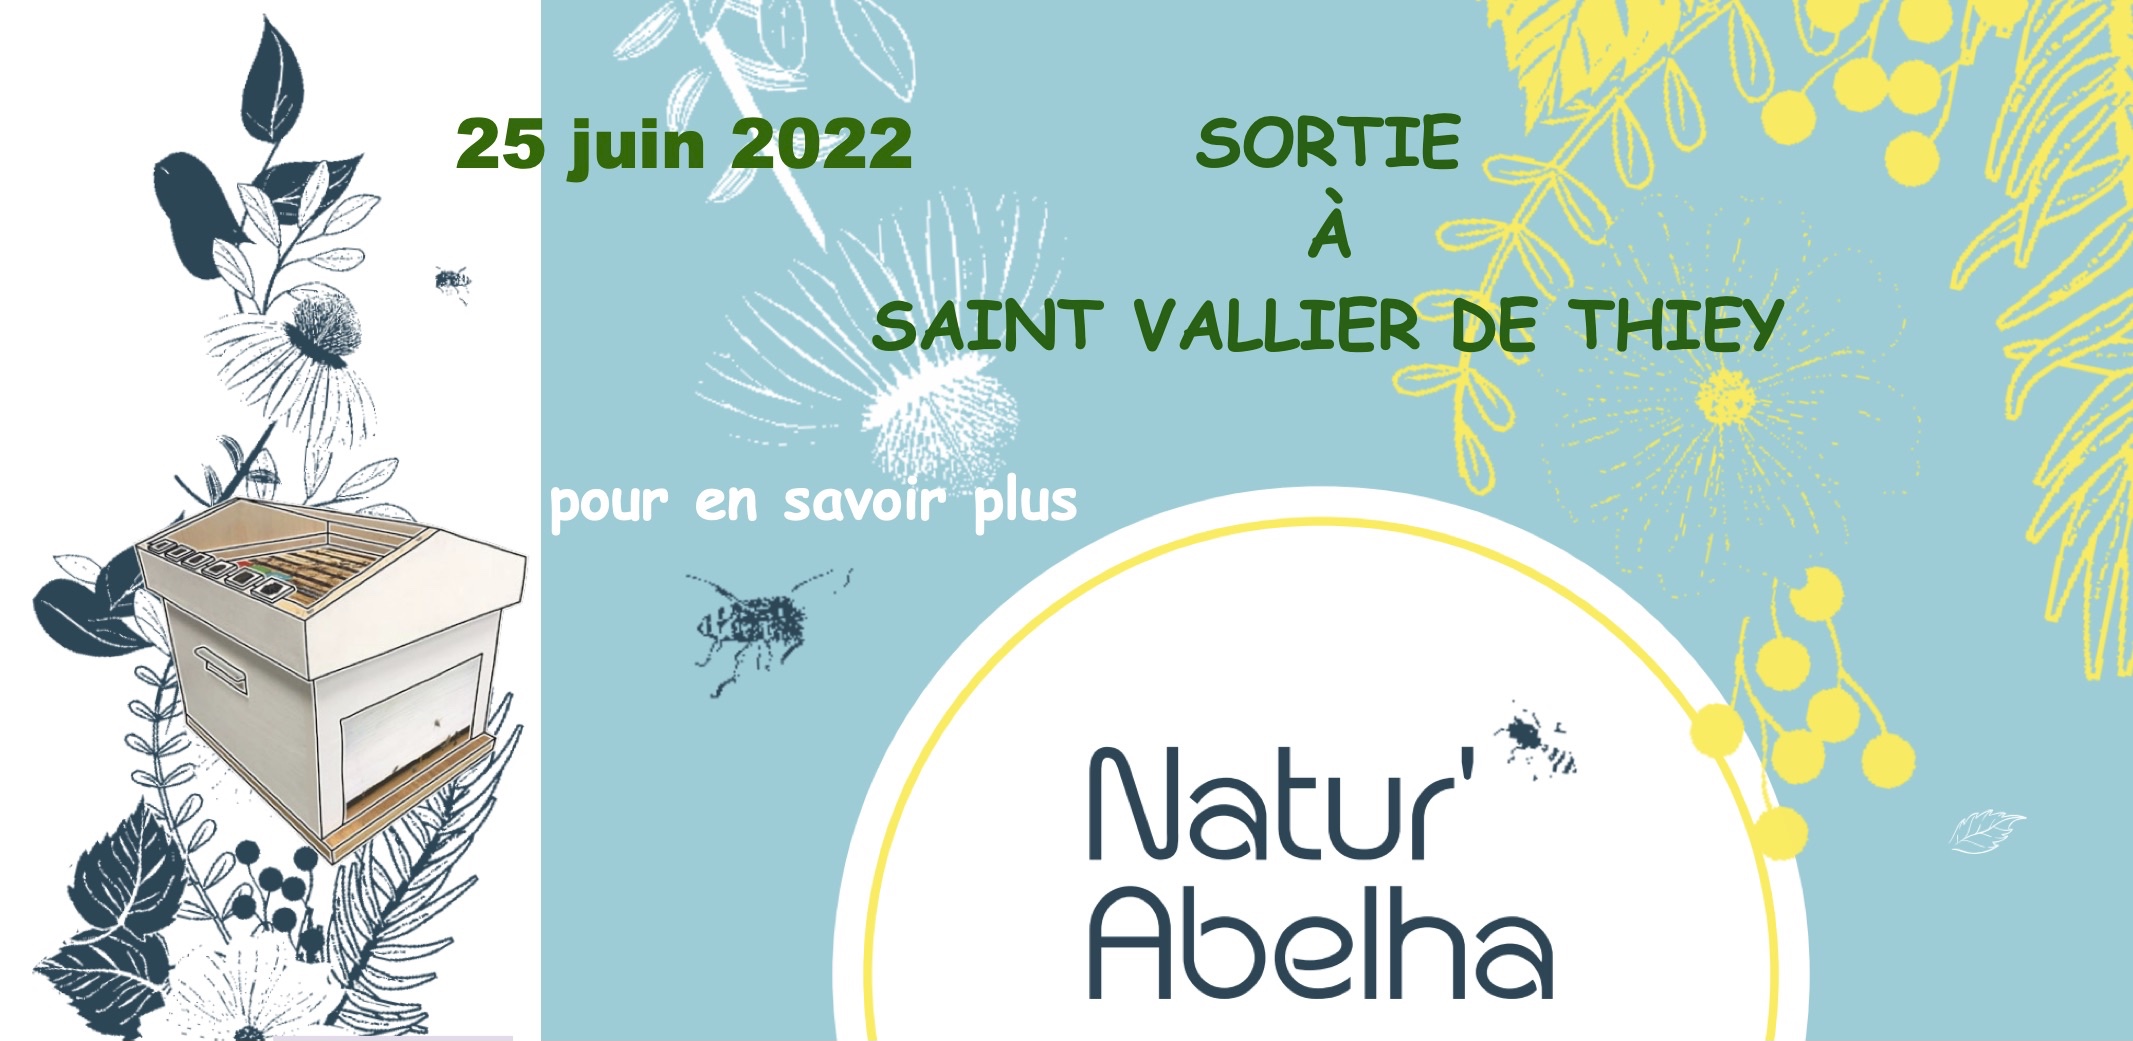 Sortie au rucher Natur’Abelha, 25 juin 2022